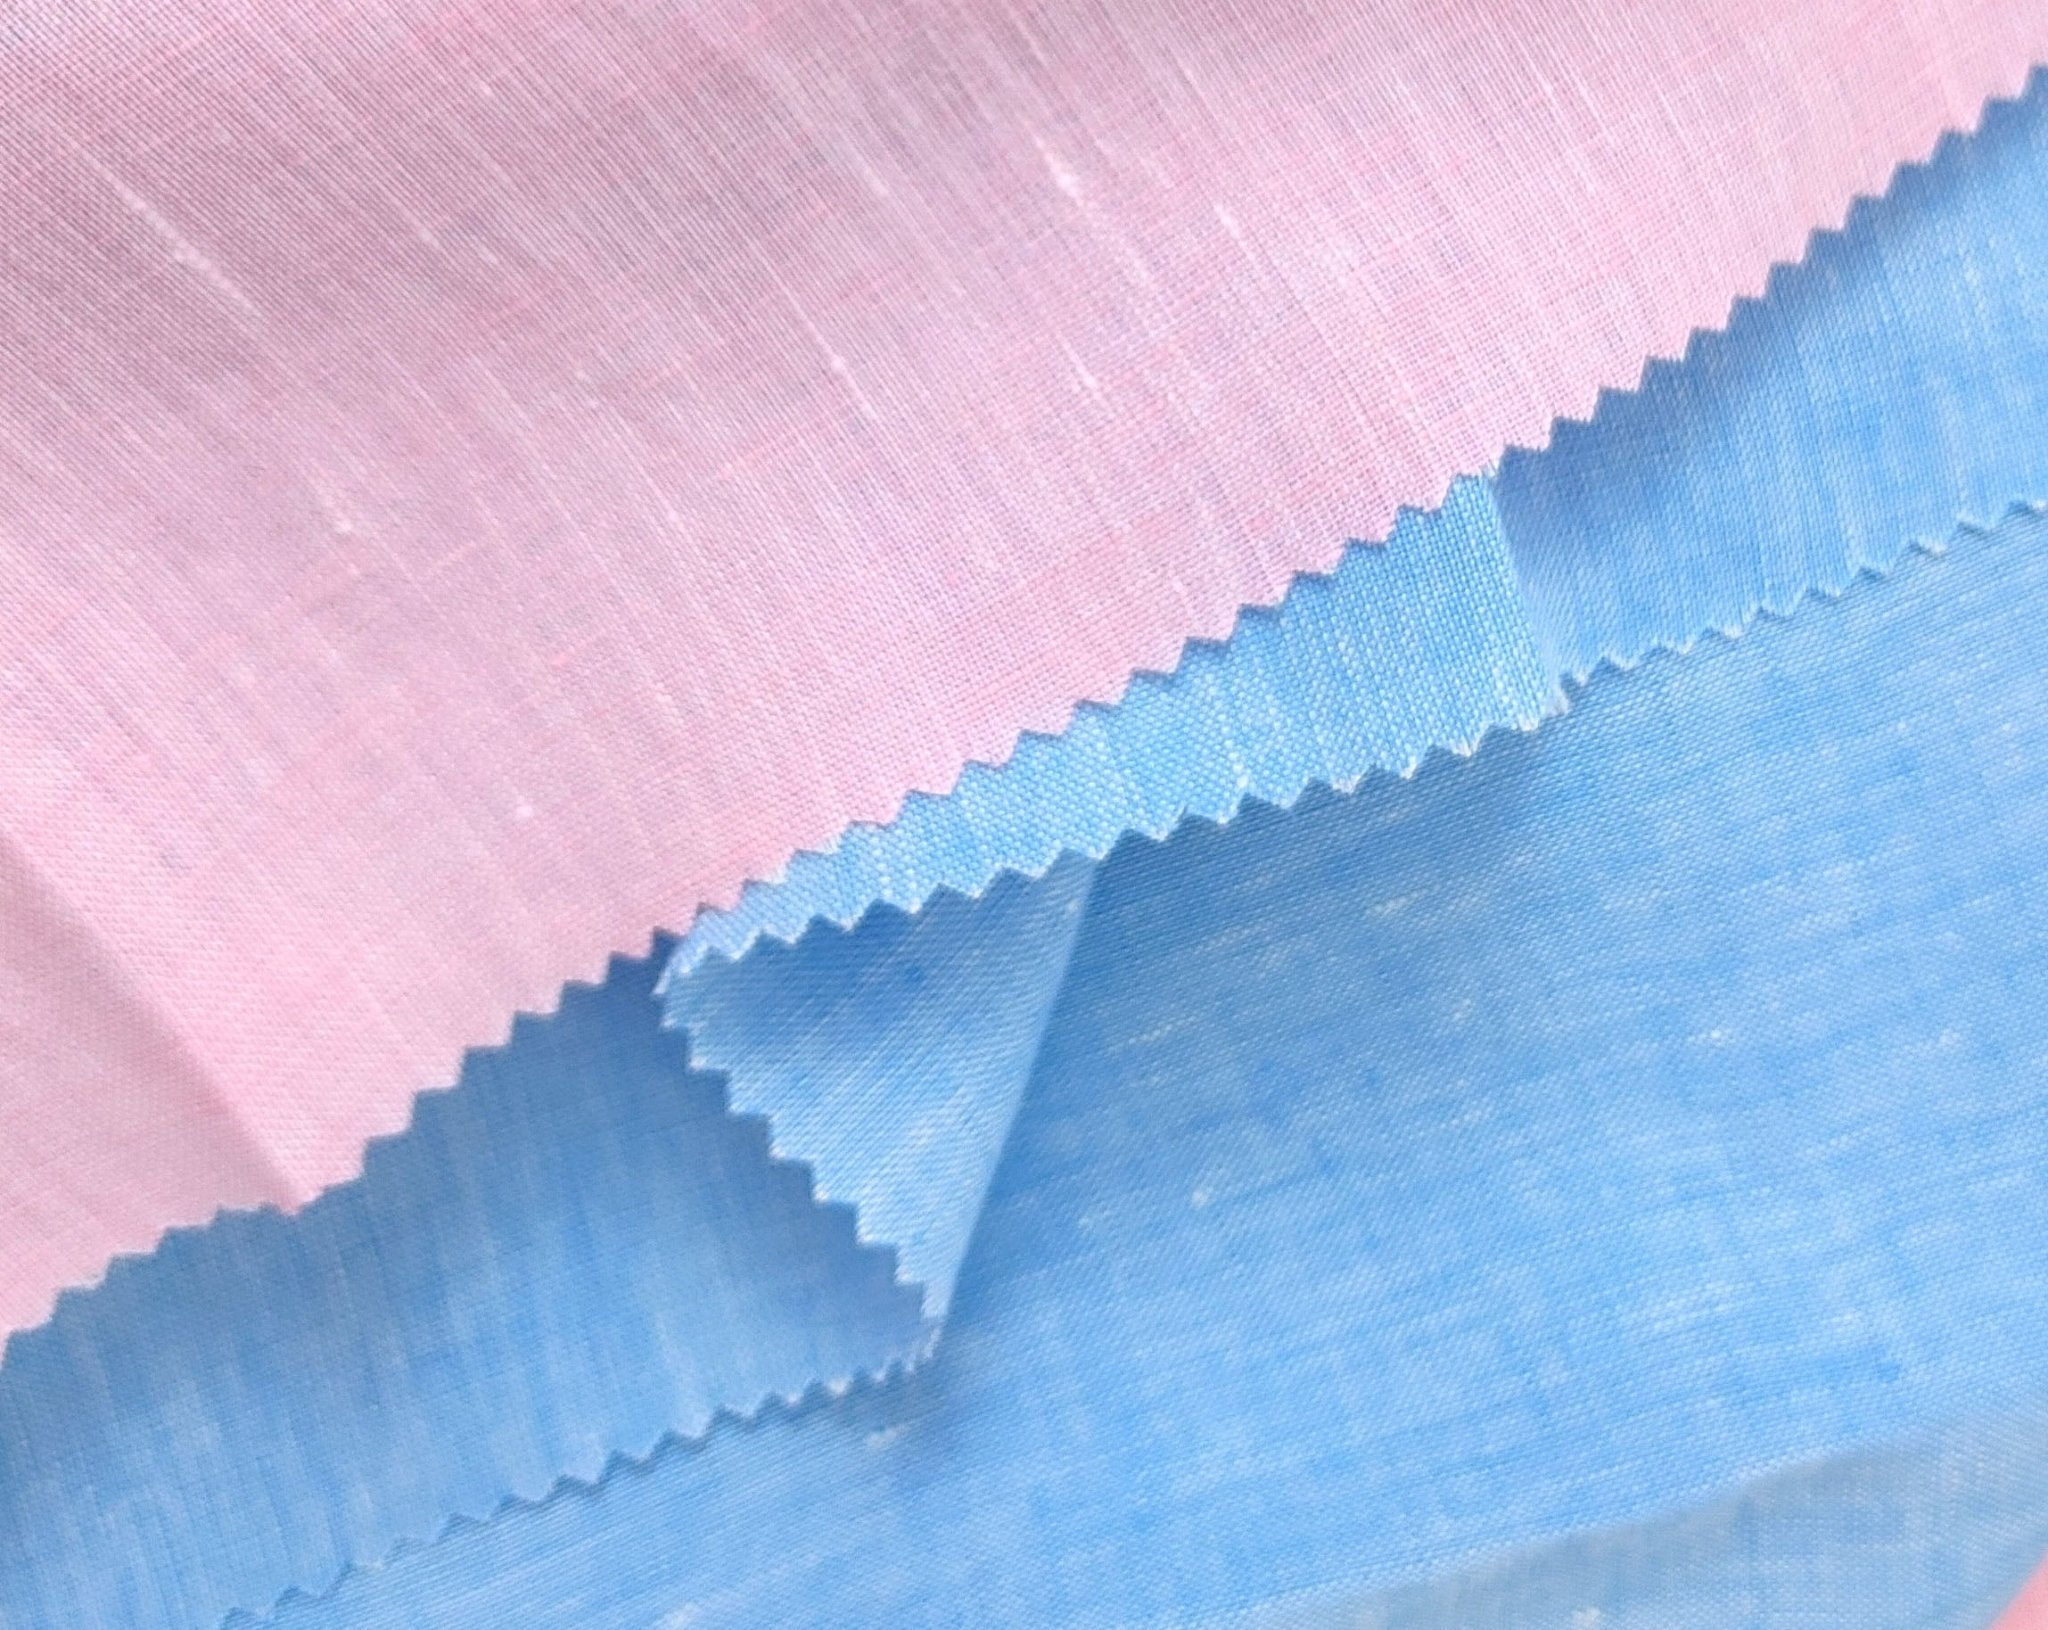 Premium 100% Linen Chambray Fabric - Medium-Light Weight, Plain Weave 7800 7801 - The Linen Lab - Blue